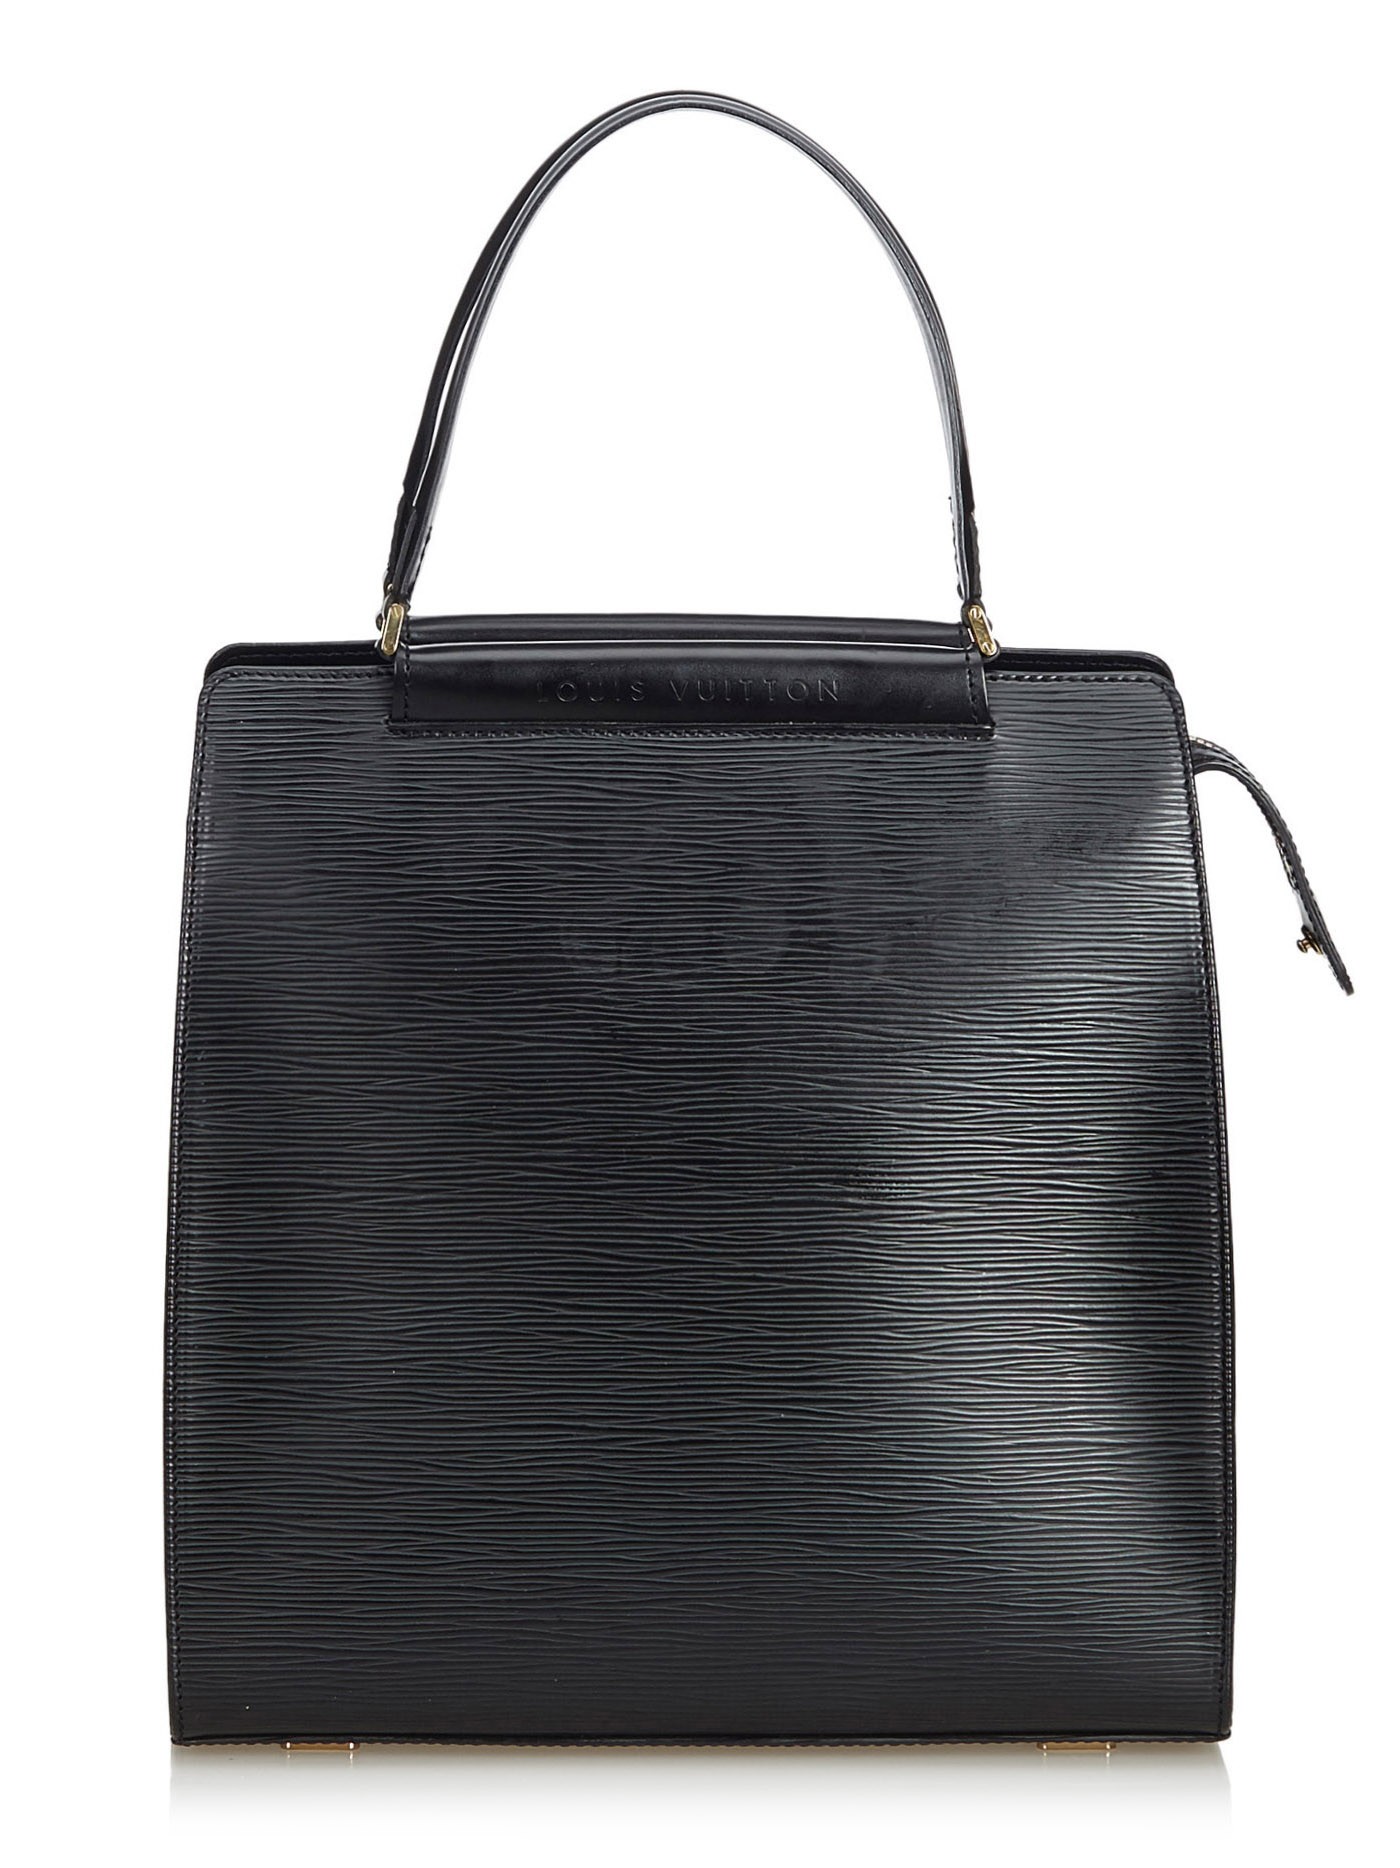 Louis Vuitton Vintage - Epi Pochette Accessoires Bag - Red - Leather and  Epi Leather Handbag - Luxury High Quality - Avvenice